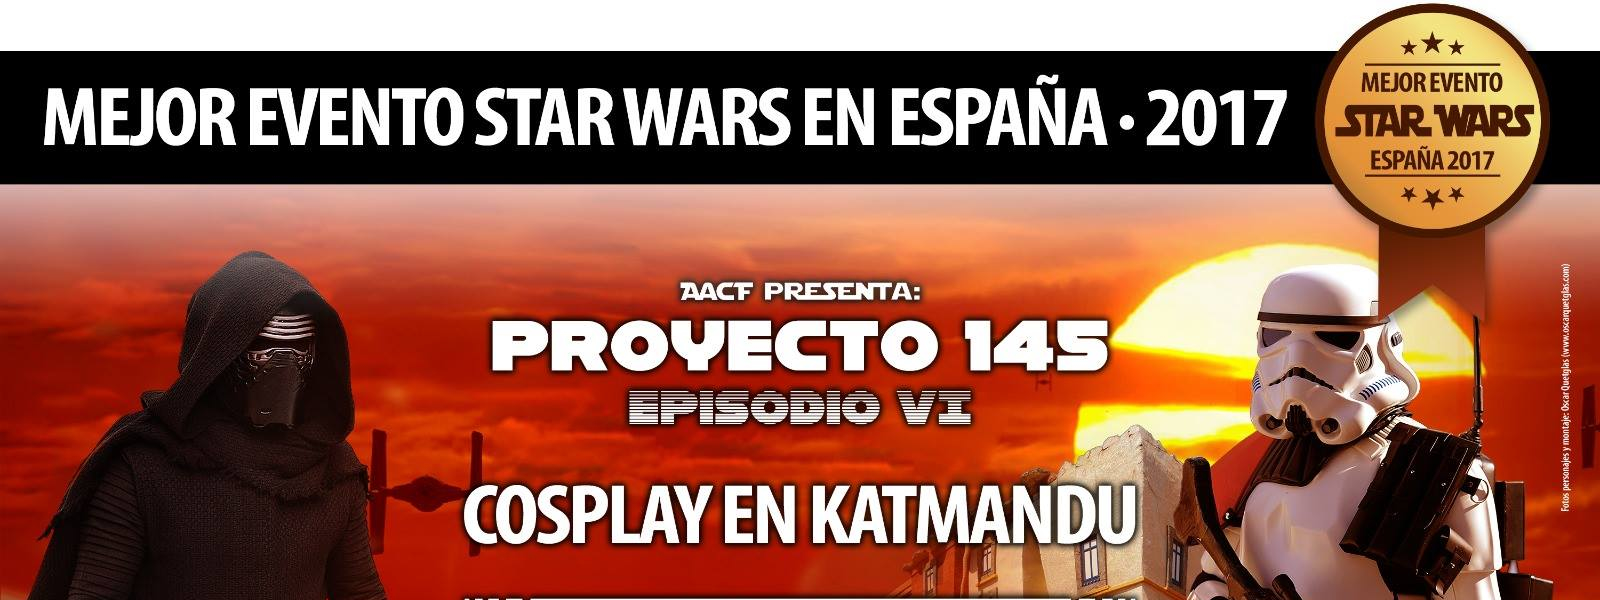 PREMIO AL MEJOR EVENTO STAR WARS ESPAÑA 2017!!!